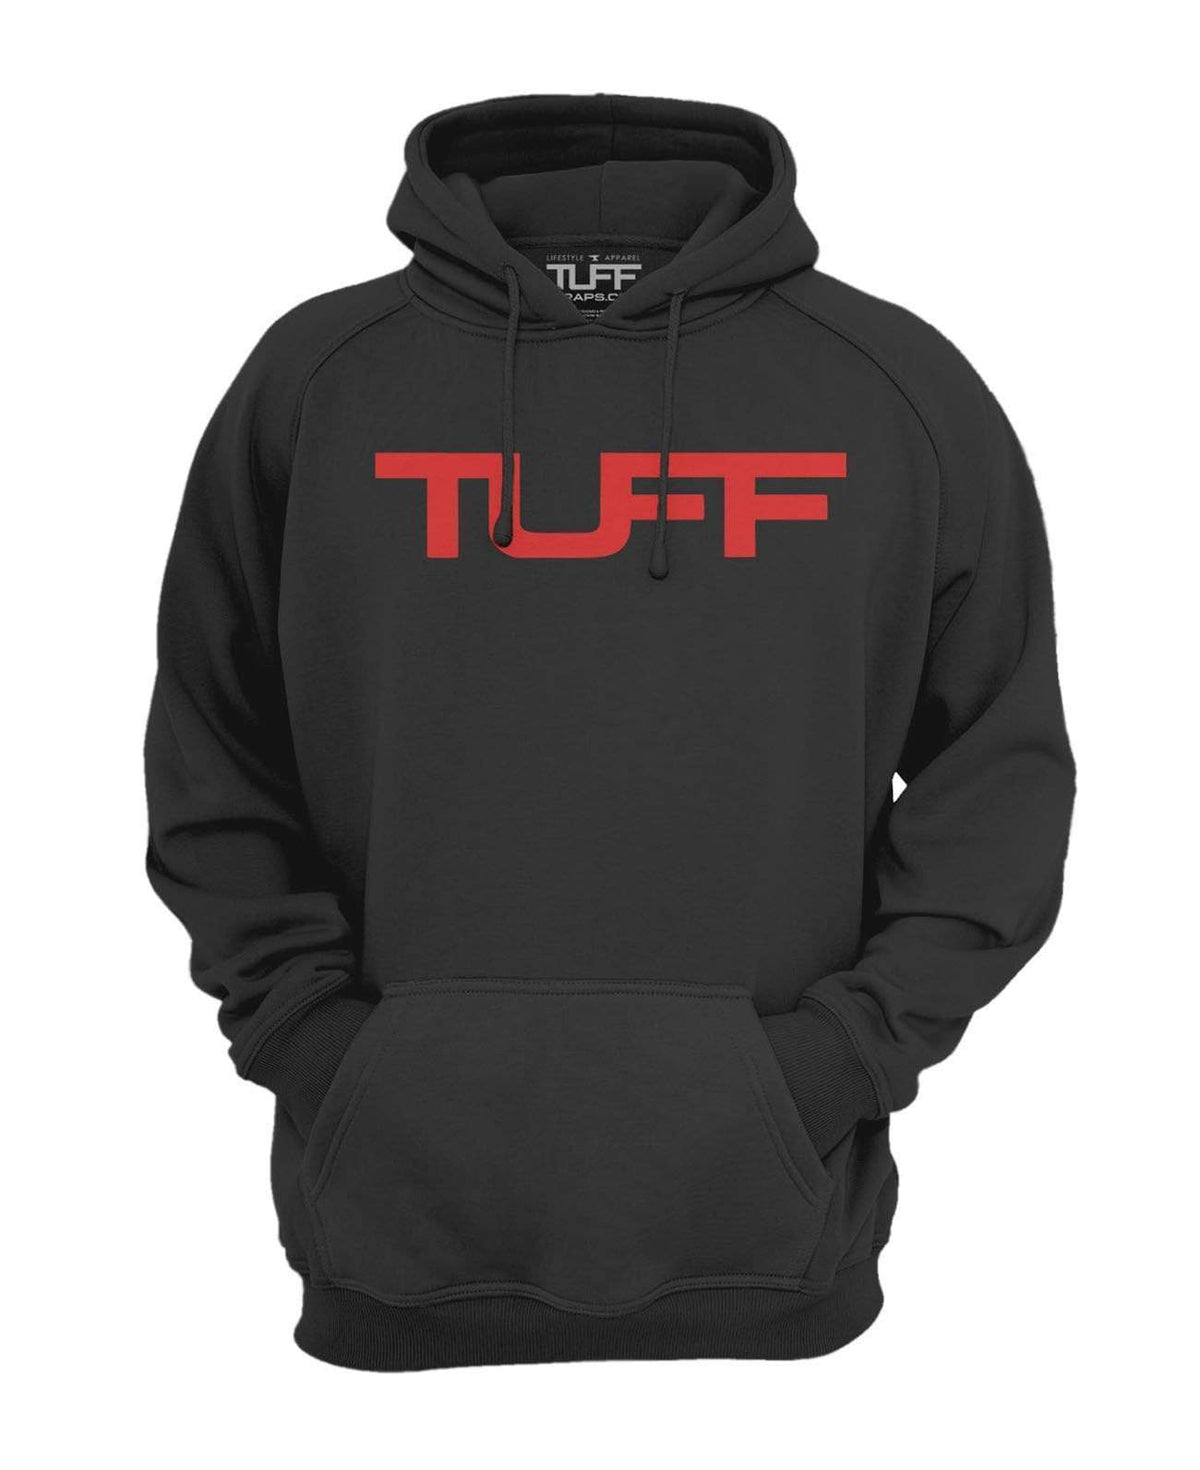 TUFF Apocalyptic Hooded Sweatshirt S / Black w/Red TuffWraps.com